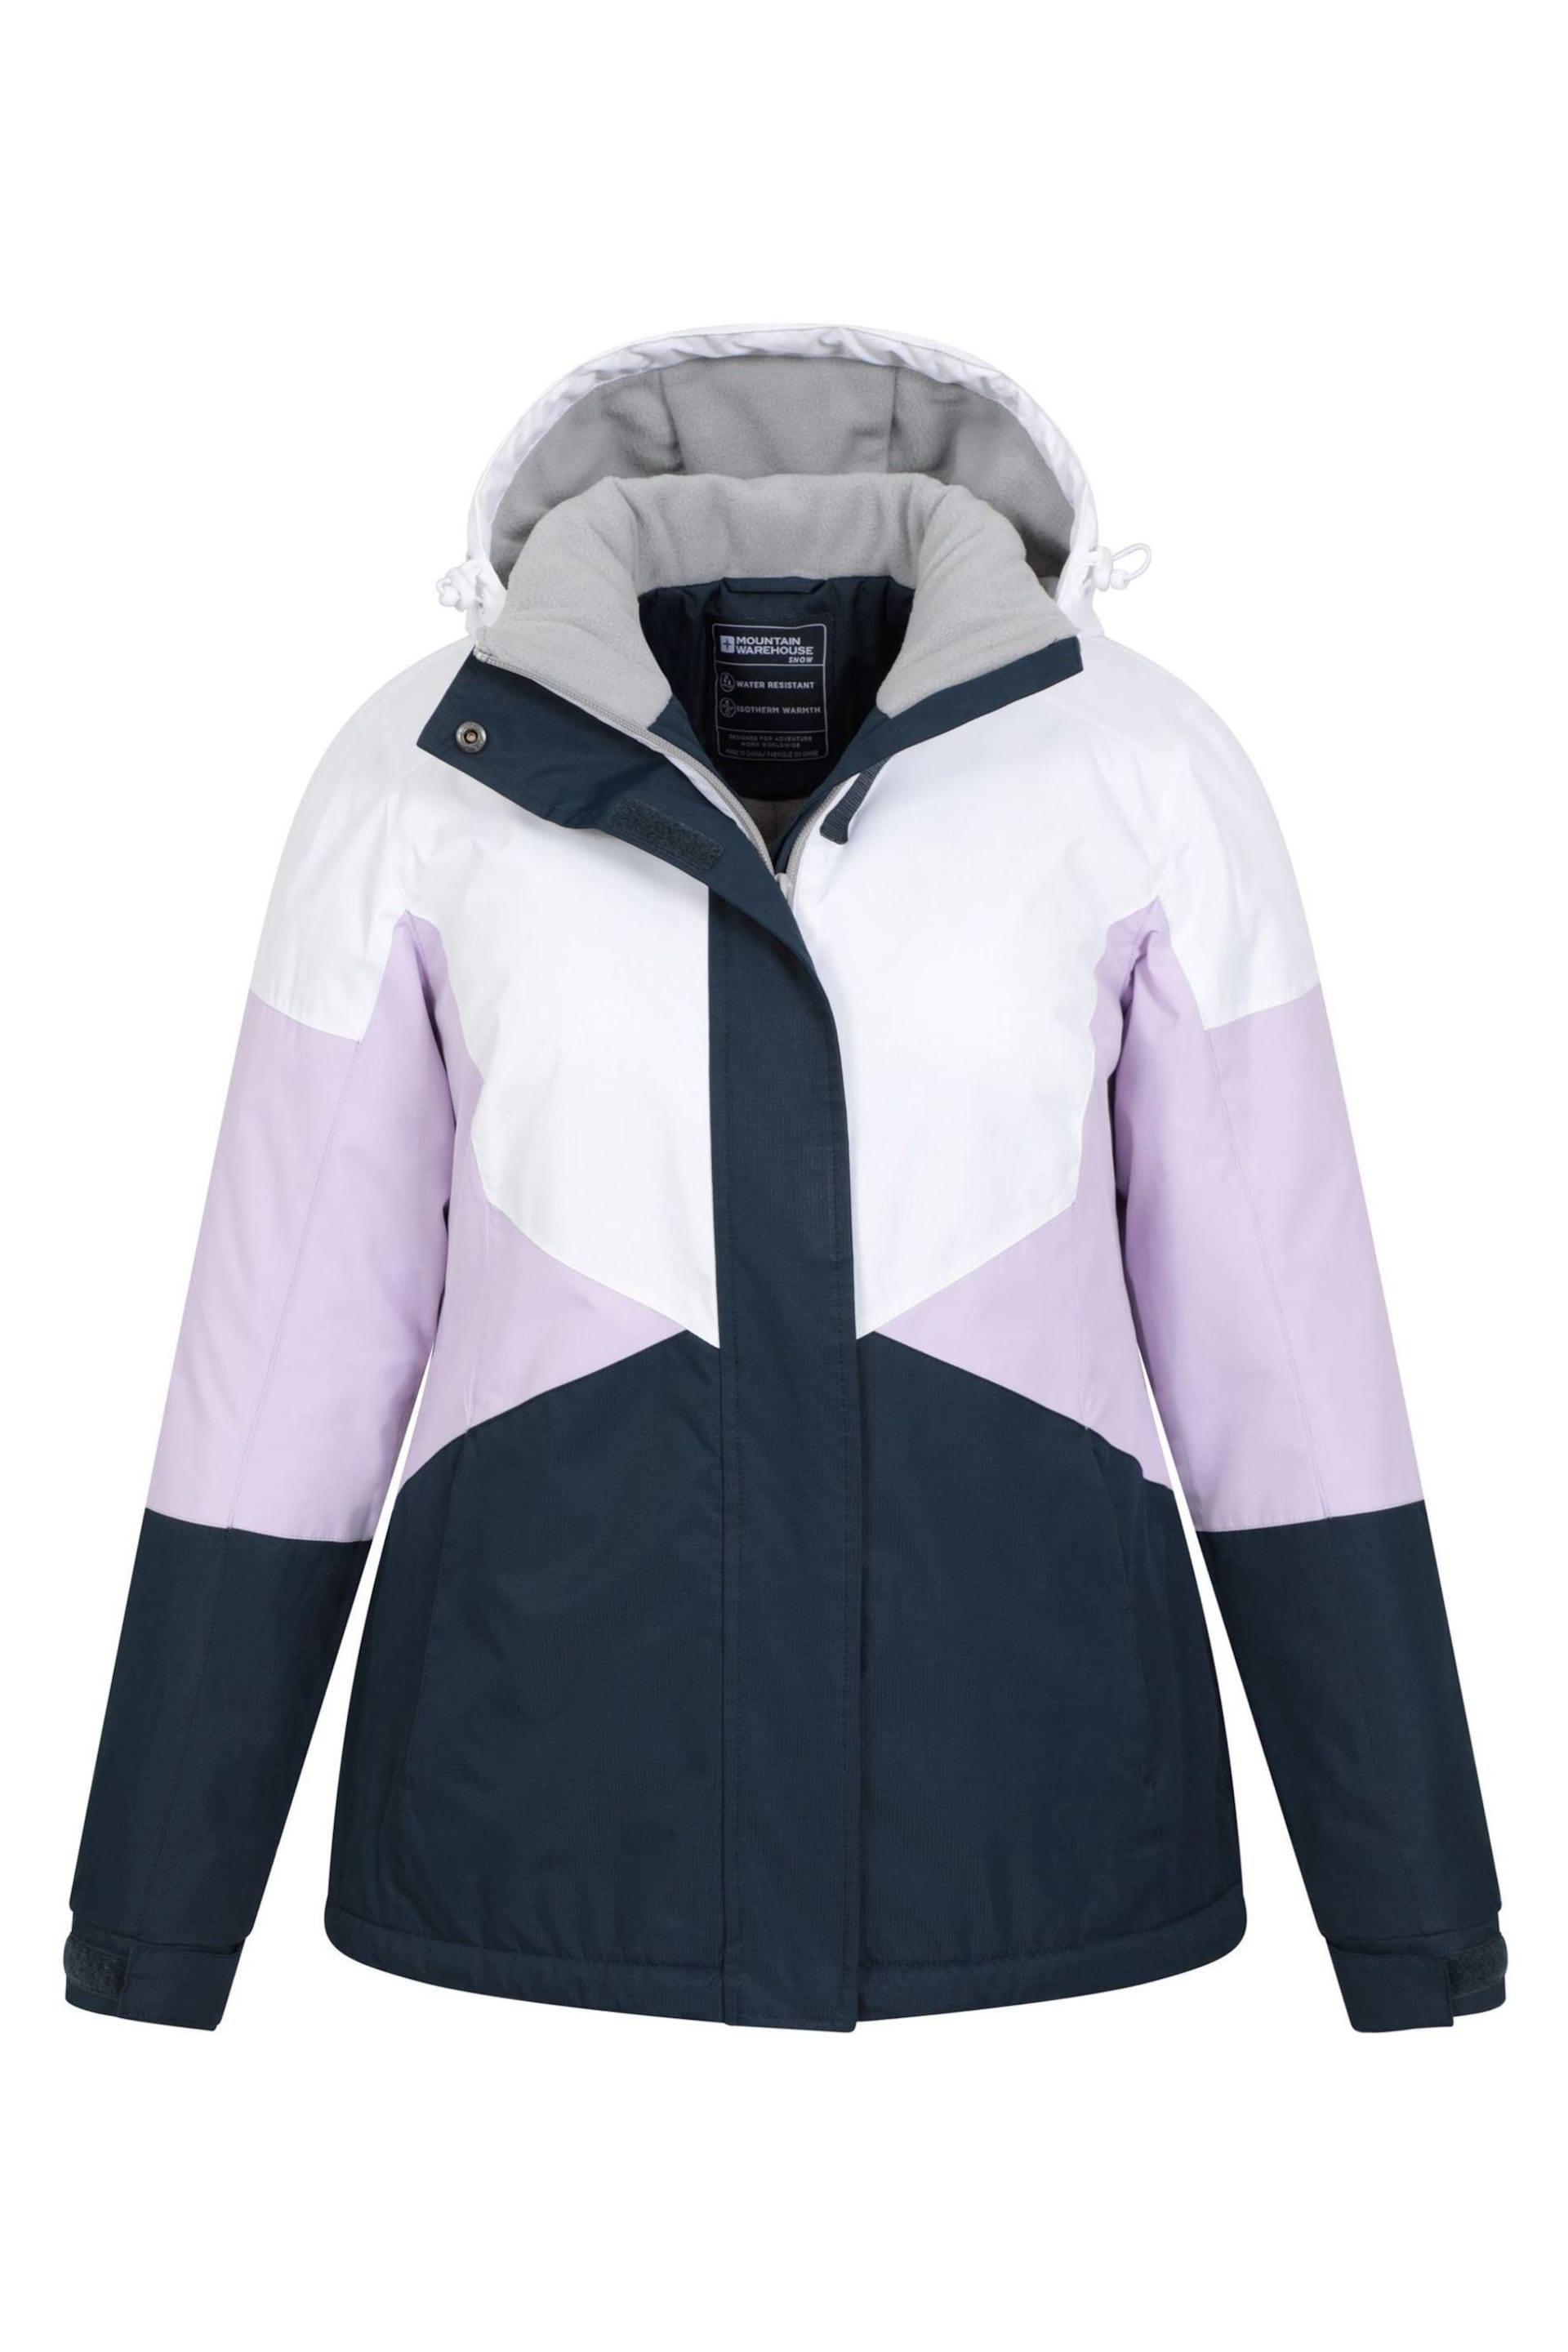 Mountain Warehouse Purple Moon II Womens Ski Jacket - Image 2 of 6